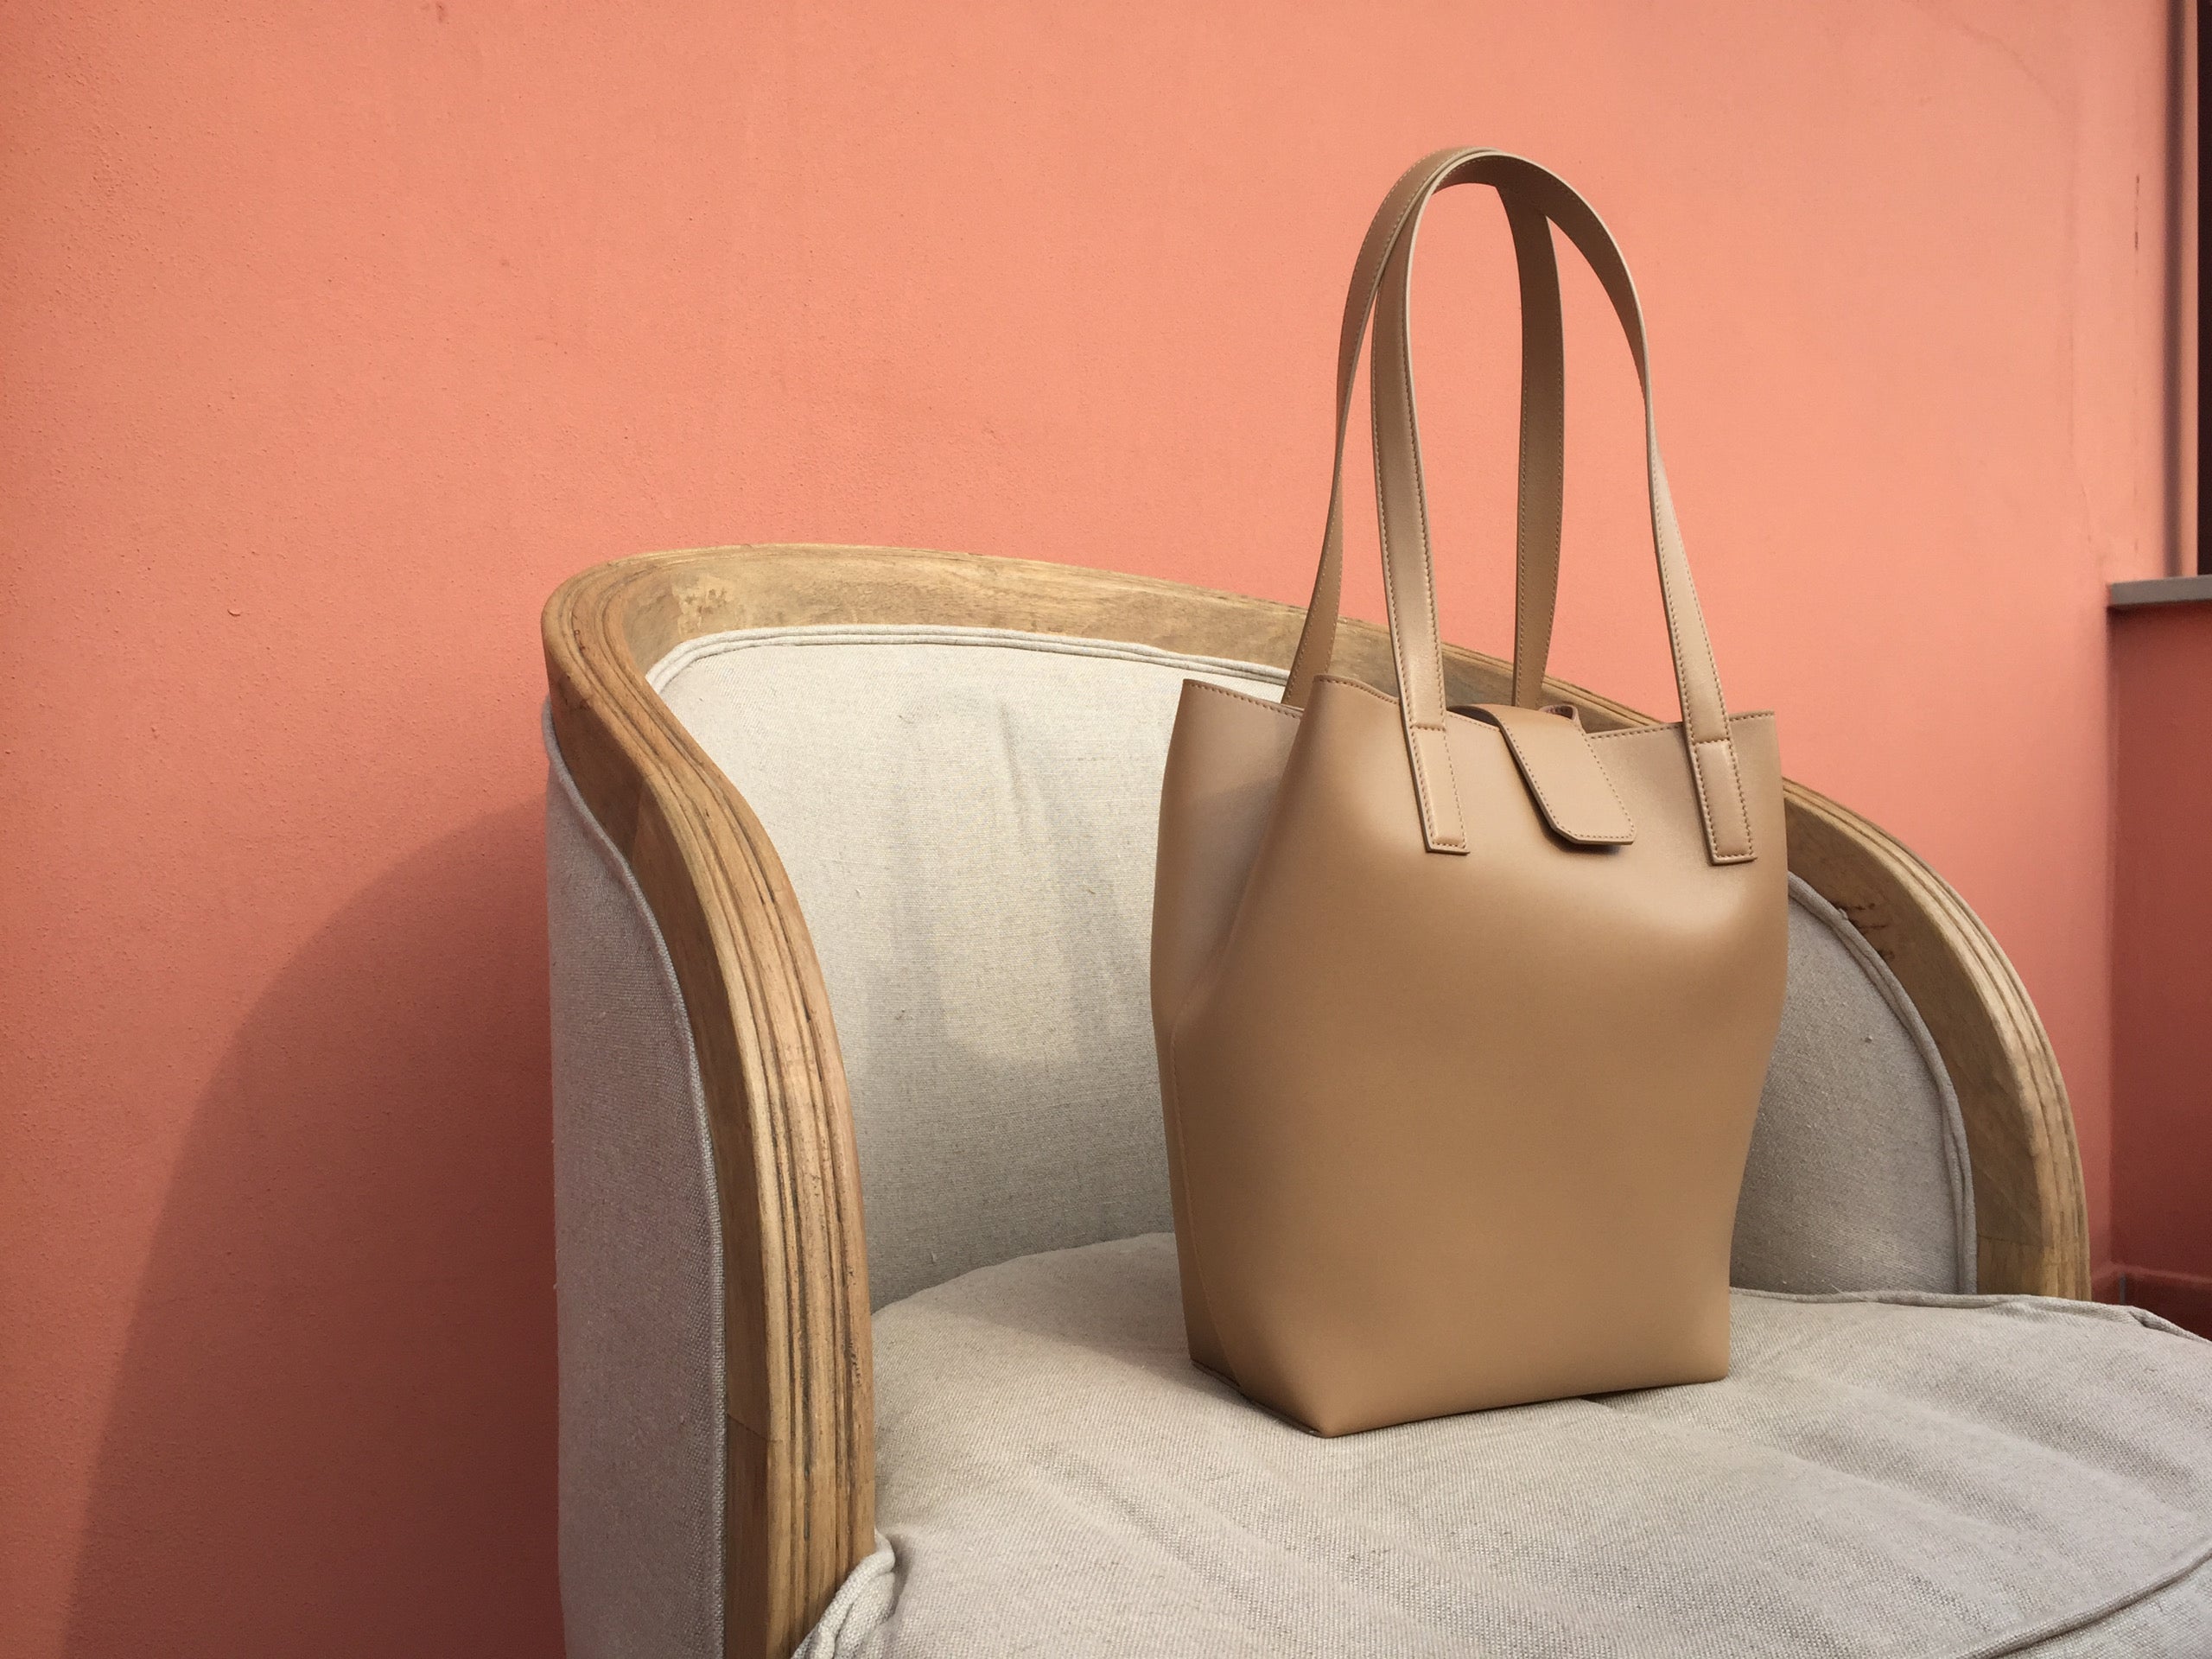 Chandra Keyser La Borsa Bag, Tan Bucket Leather Tote Bag.  Made in italy. Minimalist Style Bag. Sustainable Luxury 